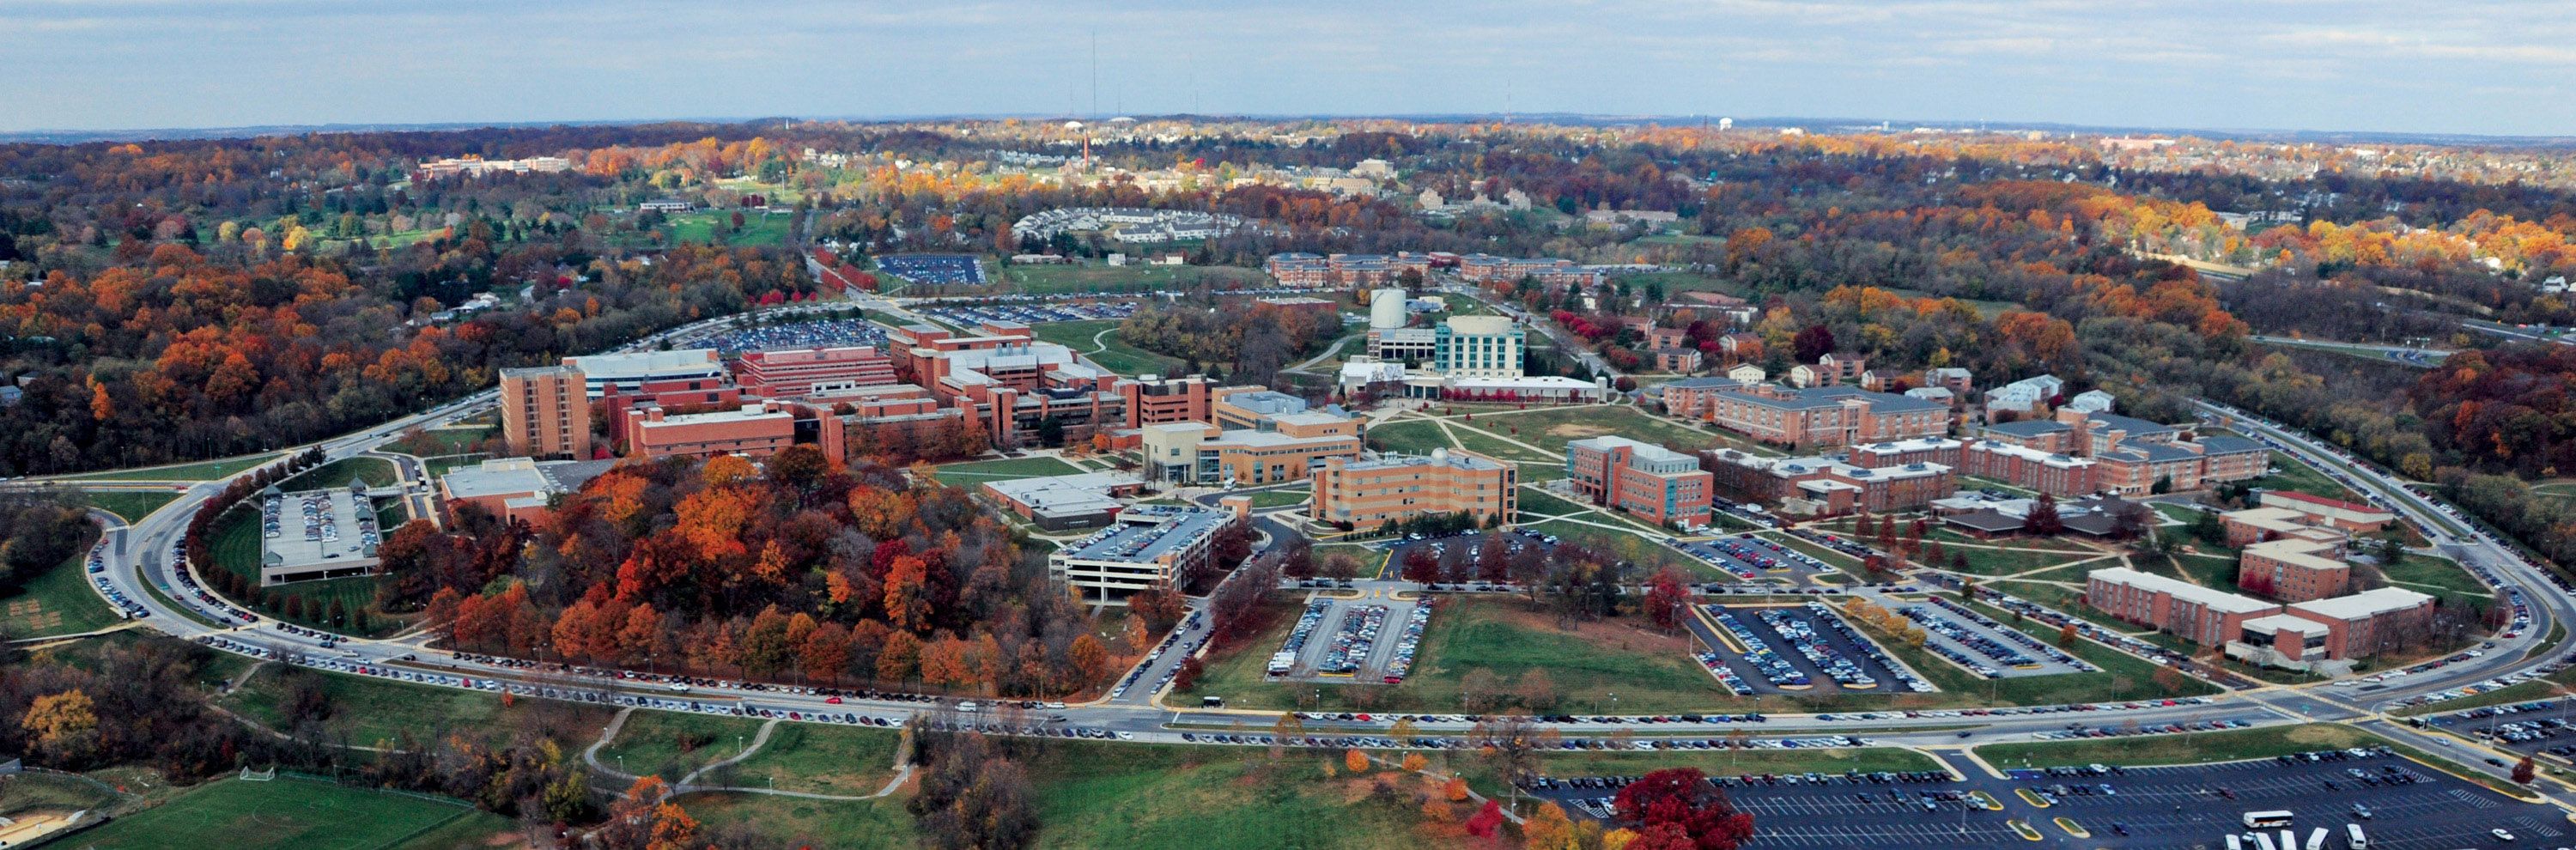 University of Maryland Baltimore county